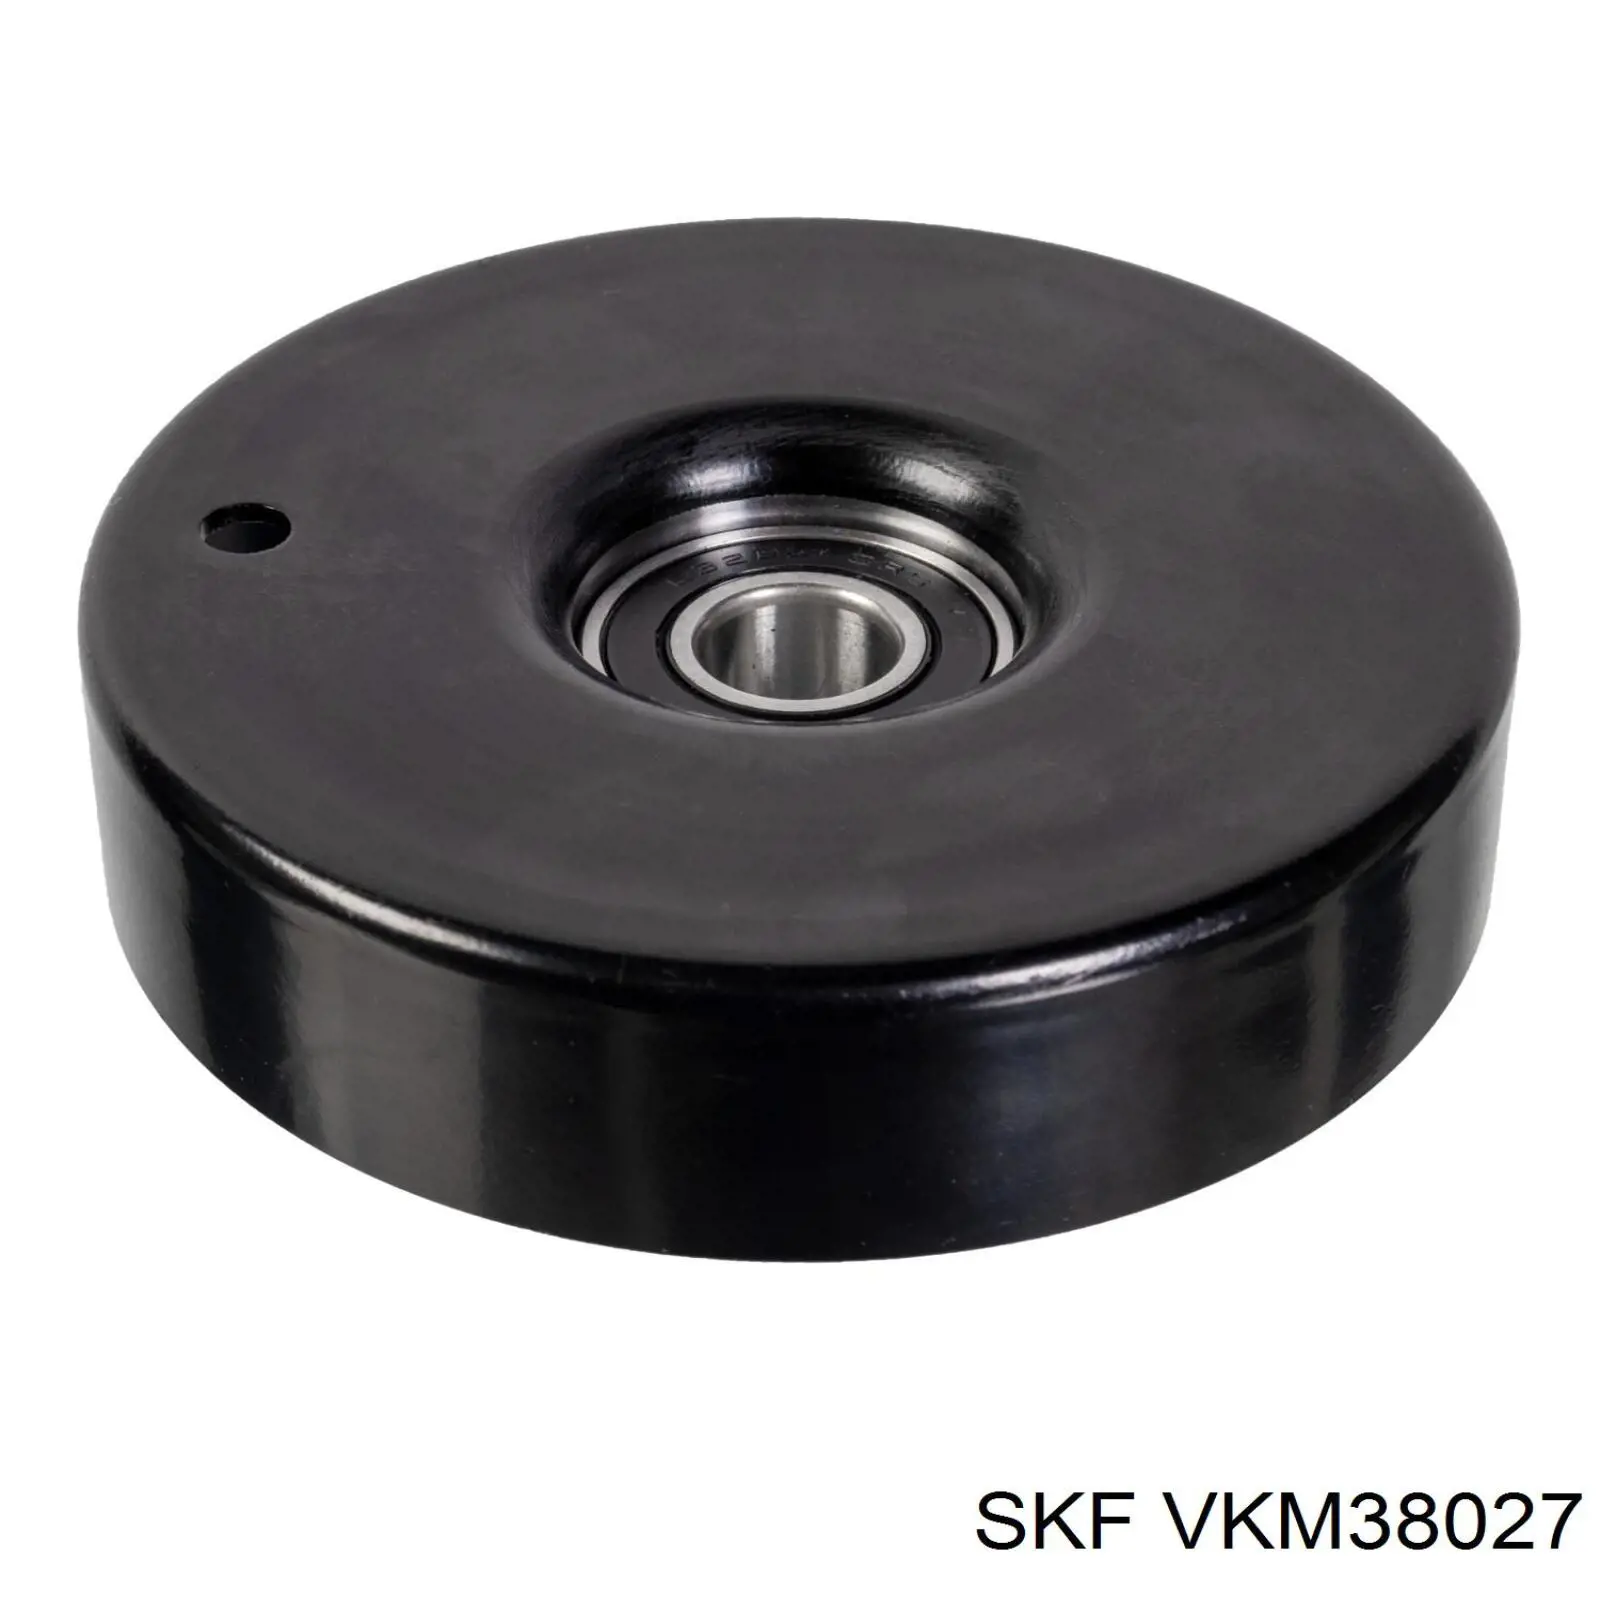 VKM38027 SKF натяжной ролик